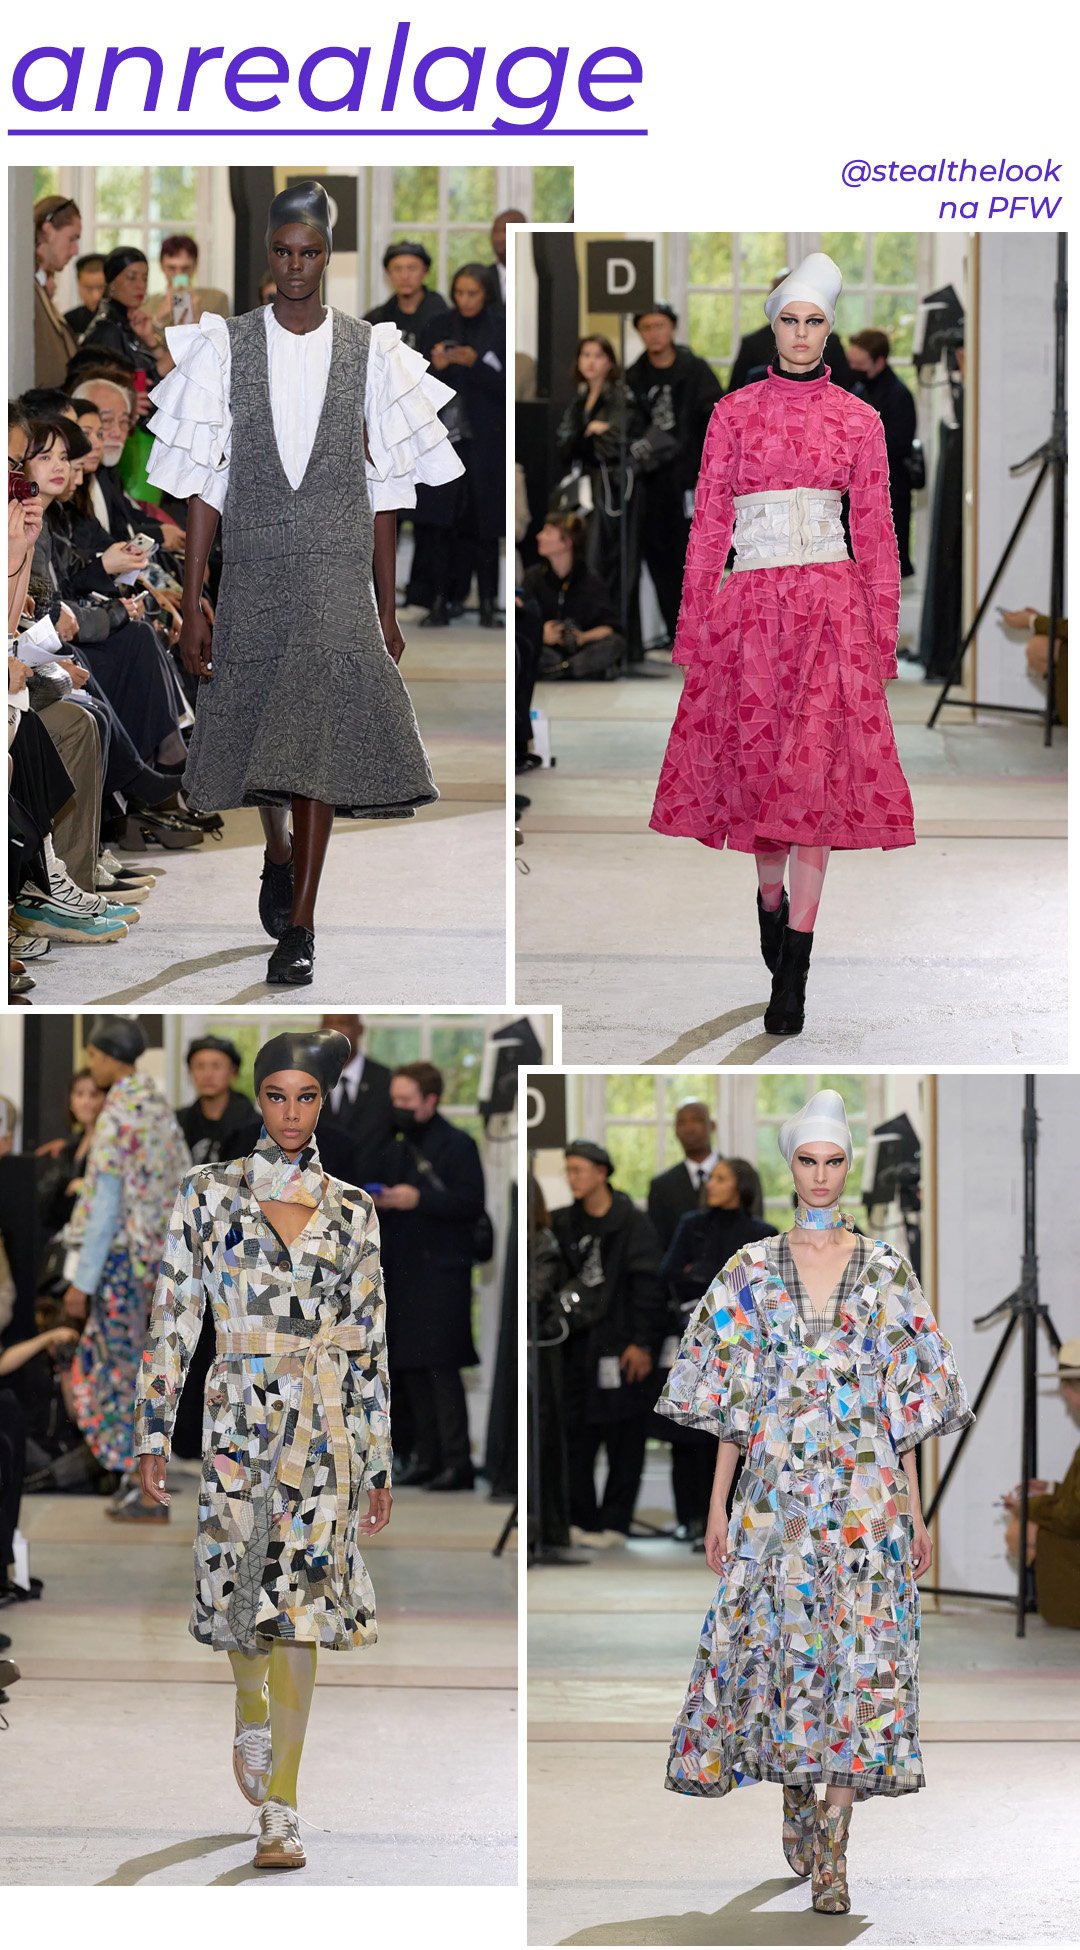 Anrealage S/S 2023 - roupas estampadas diversas - Paris Fashion Week - Primavera - modelo andando pela passarela - https://stealthelook.com.br